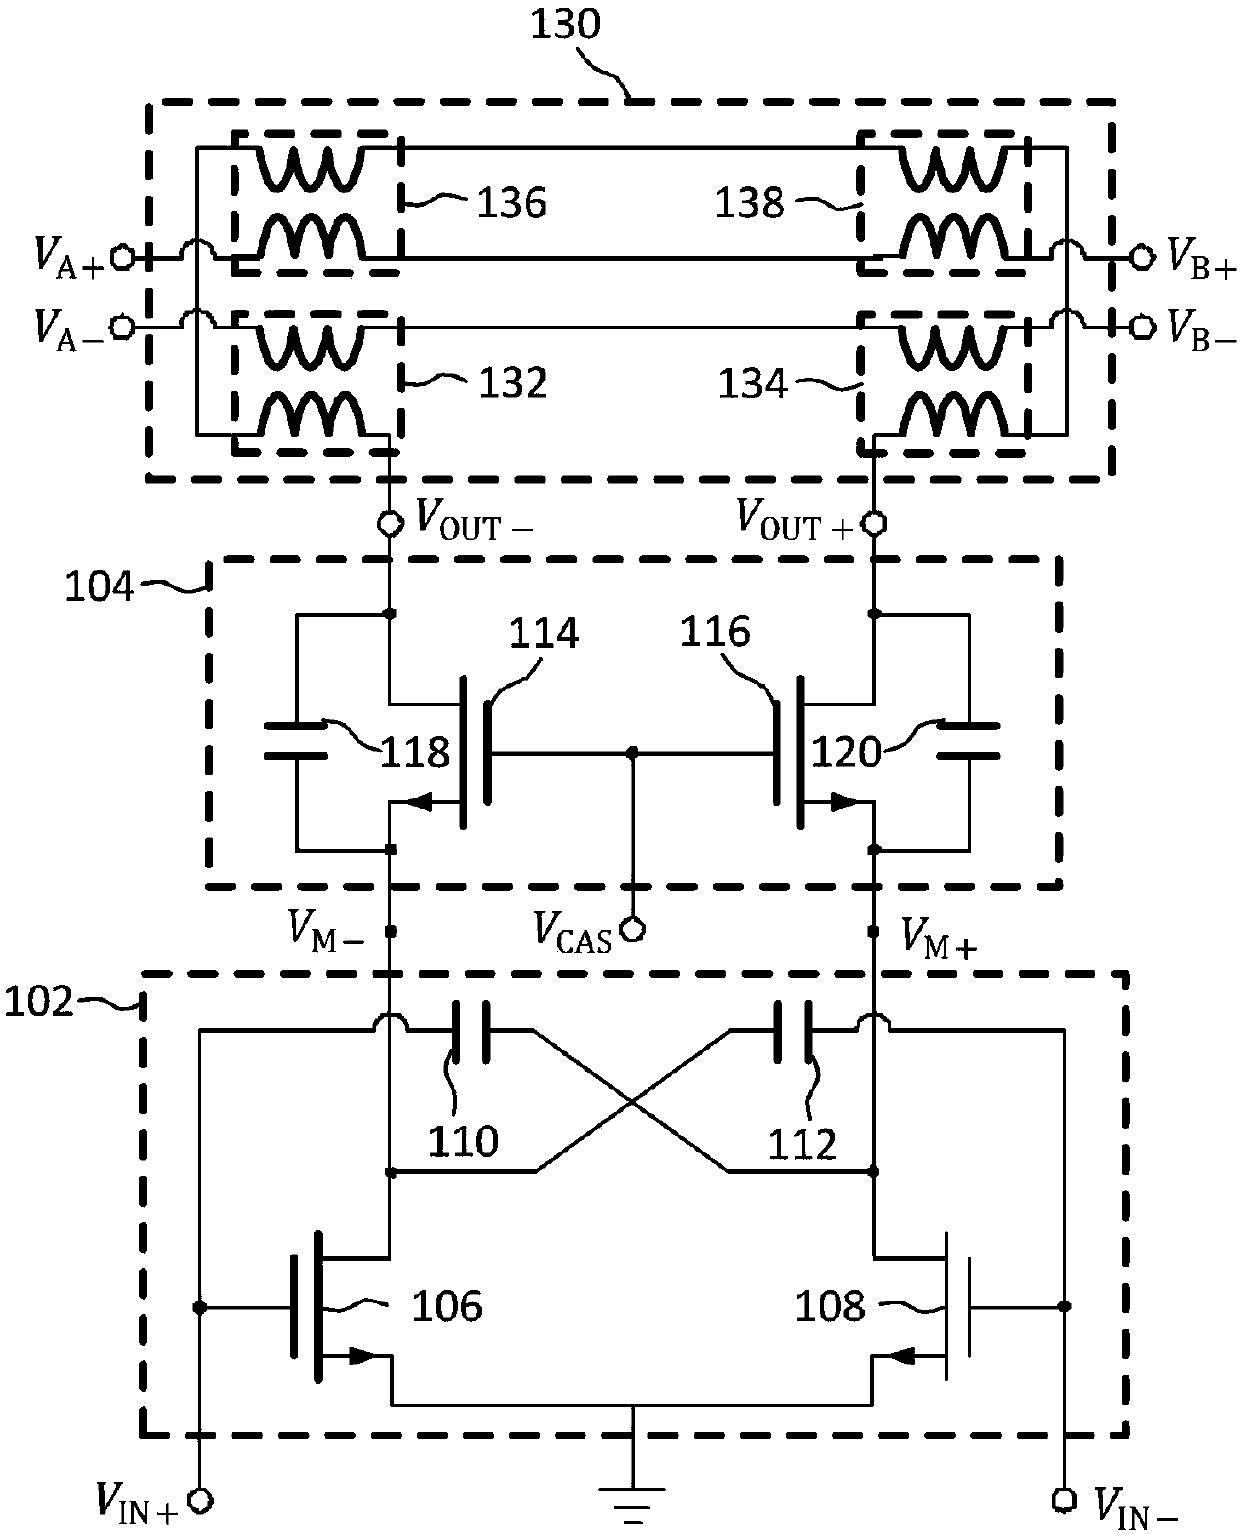 Neutralizing bootstrap cascode amplifier suitable for millimeter-wave power amplification